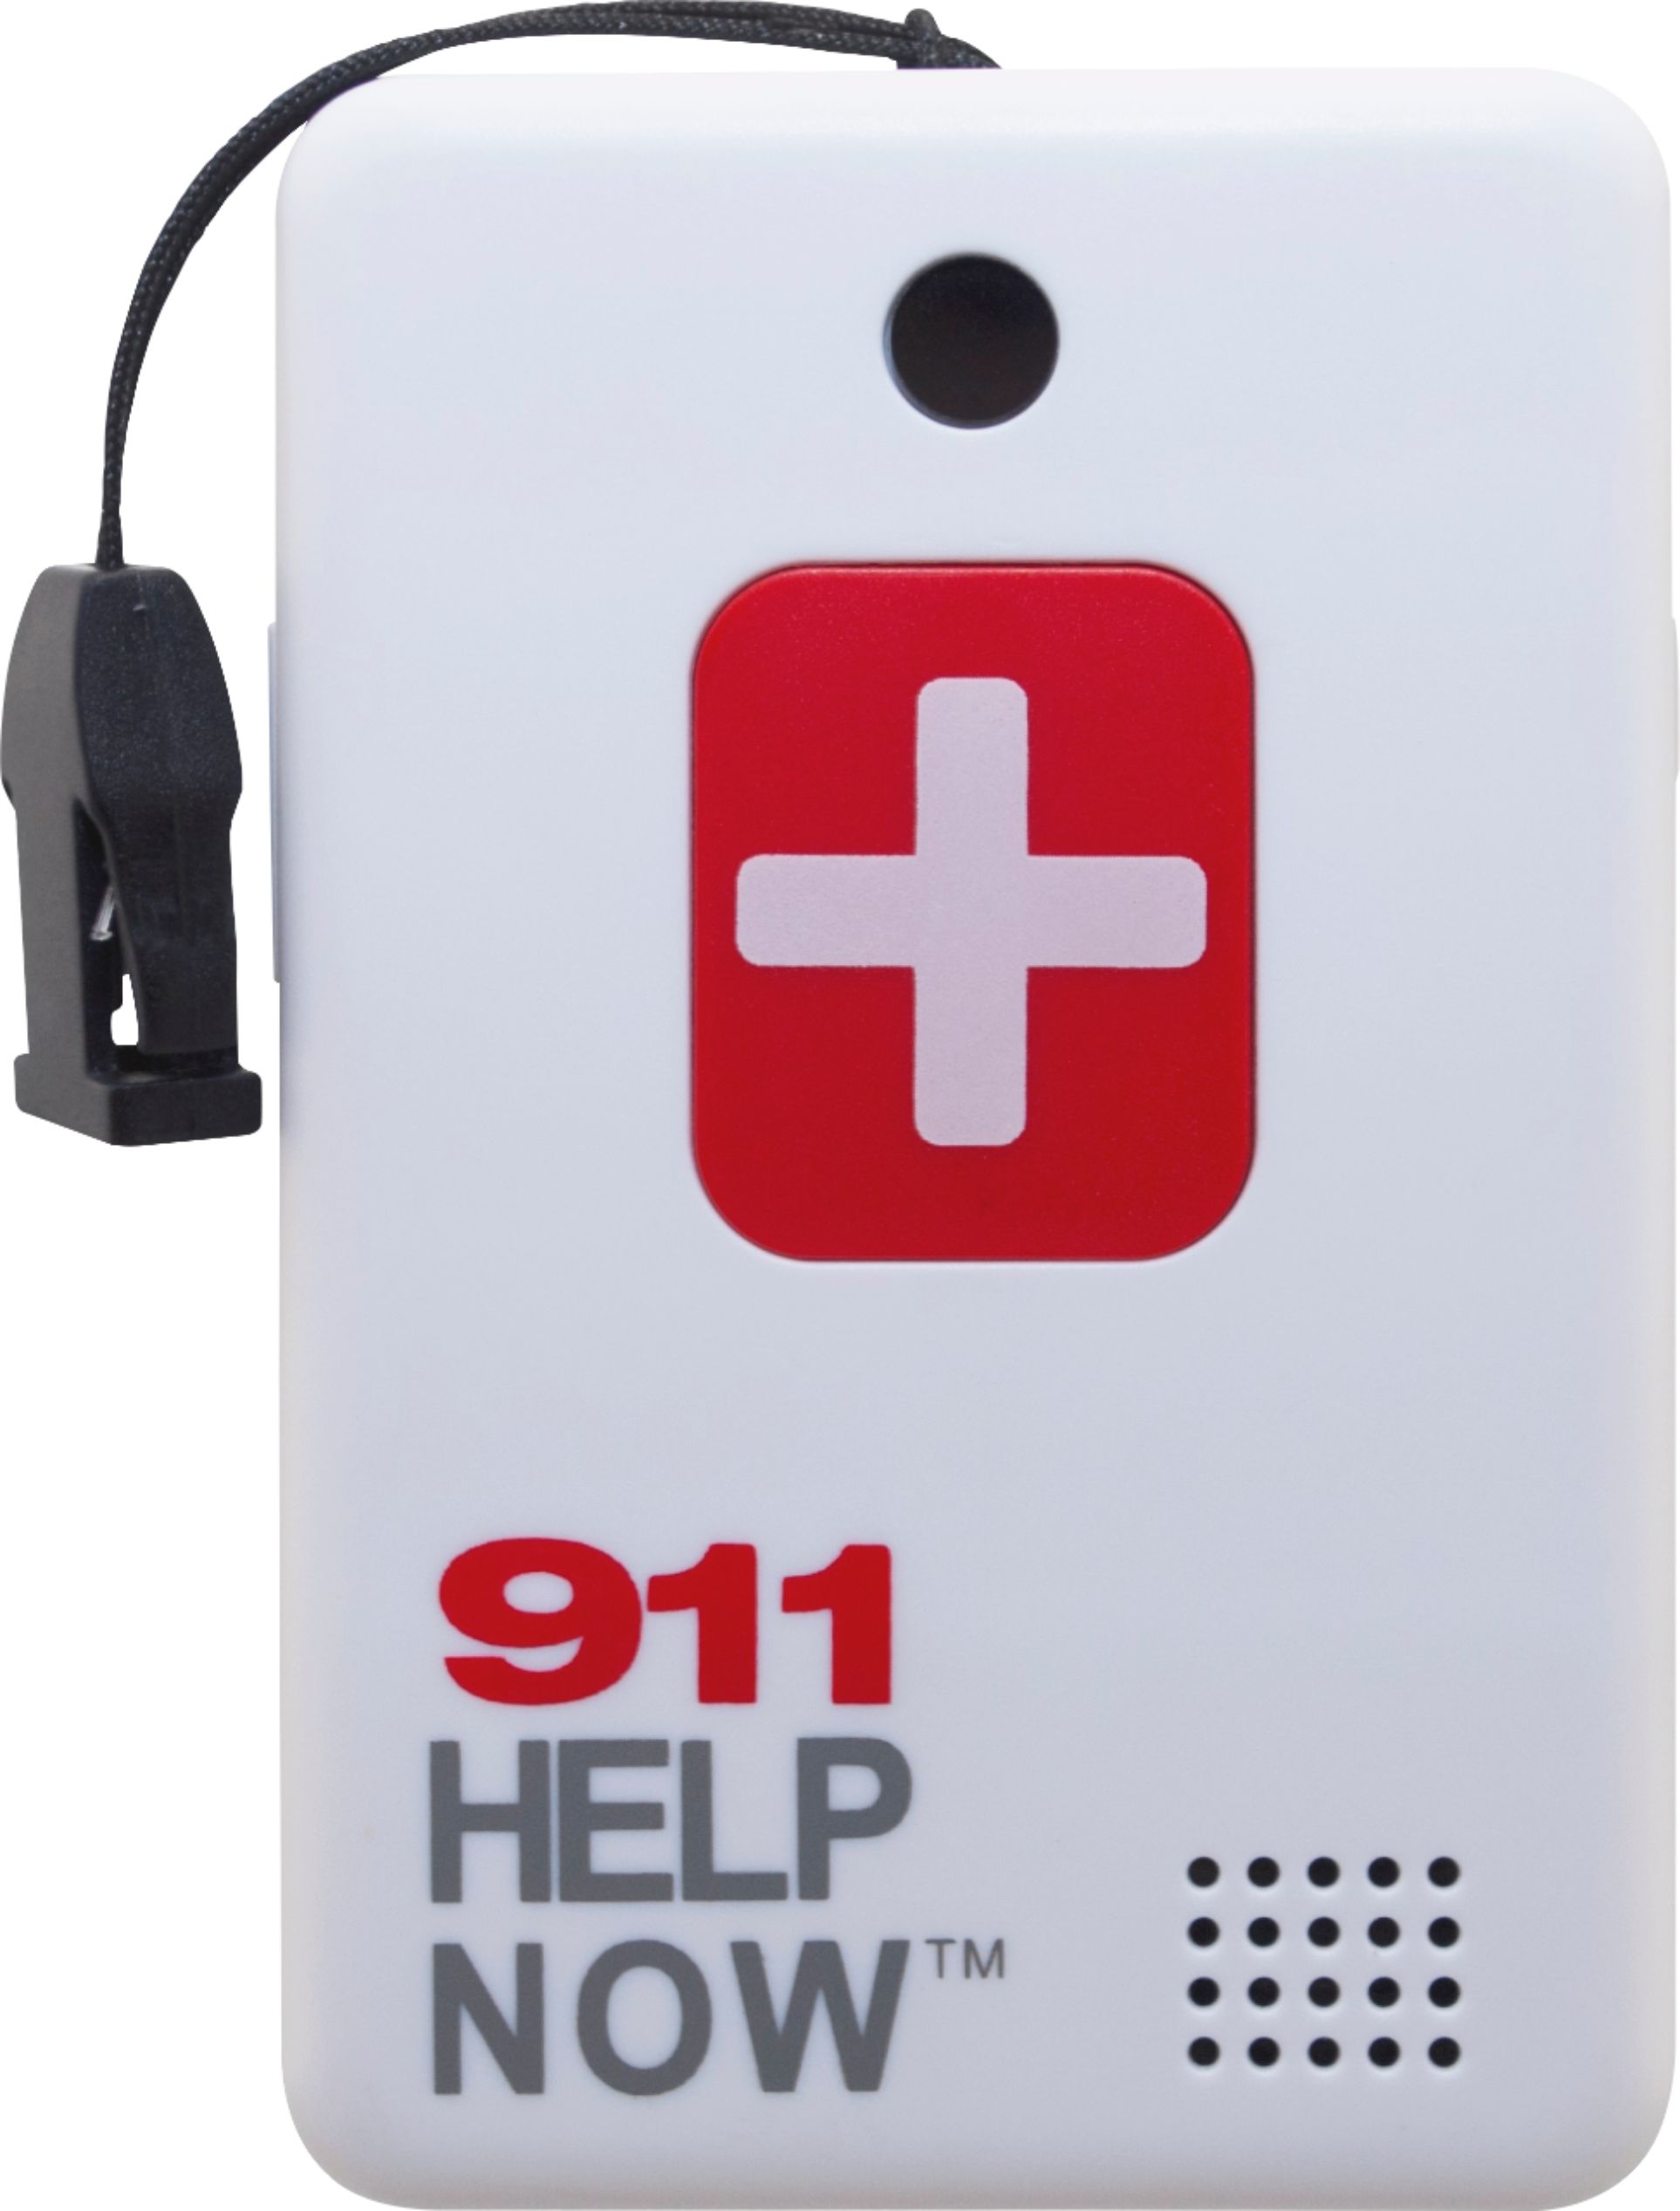 Customer Reviews: Emergency Medical Alert Pendant white 911HN - Best Buy